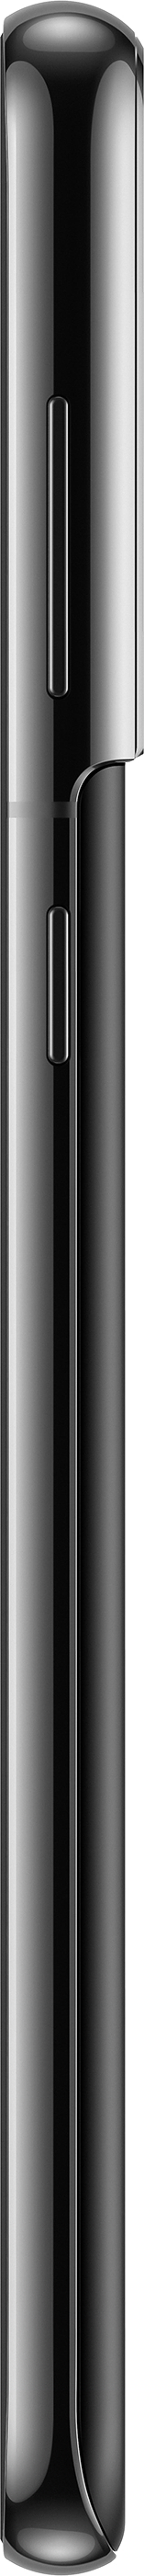 Samsung Galaxy S21+ 5G 128GB Dobbelt-SIM Fantomsvart